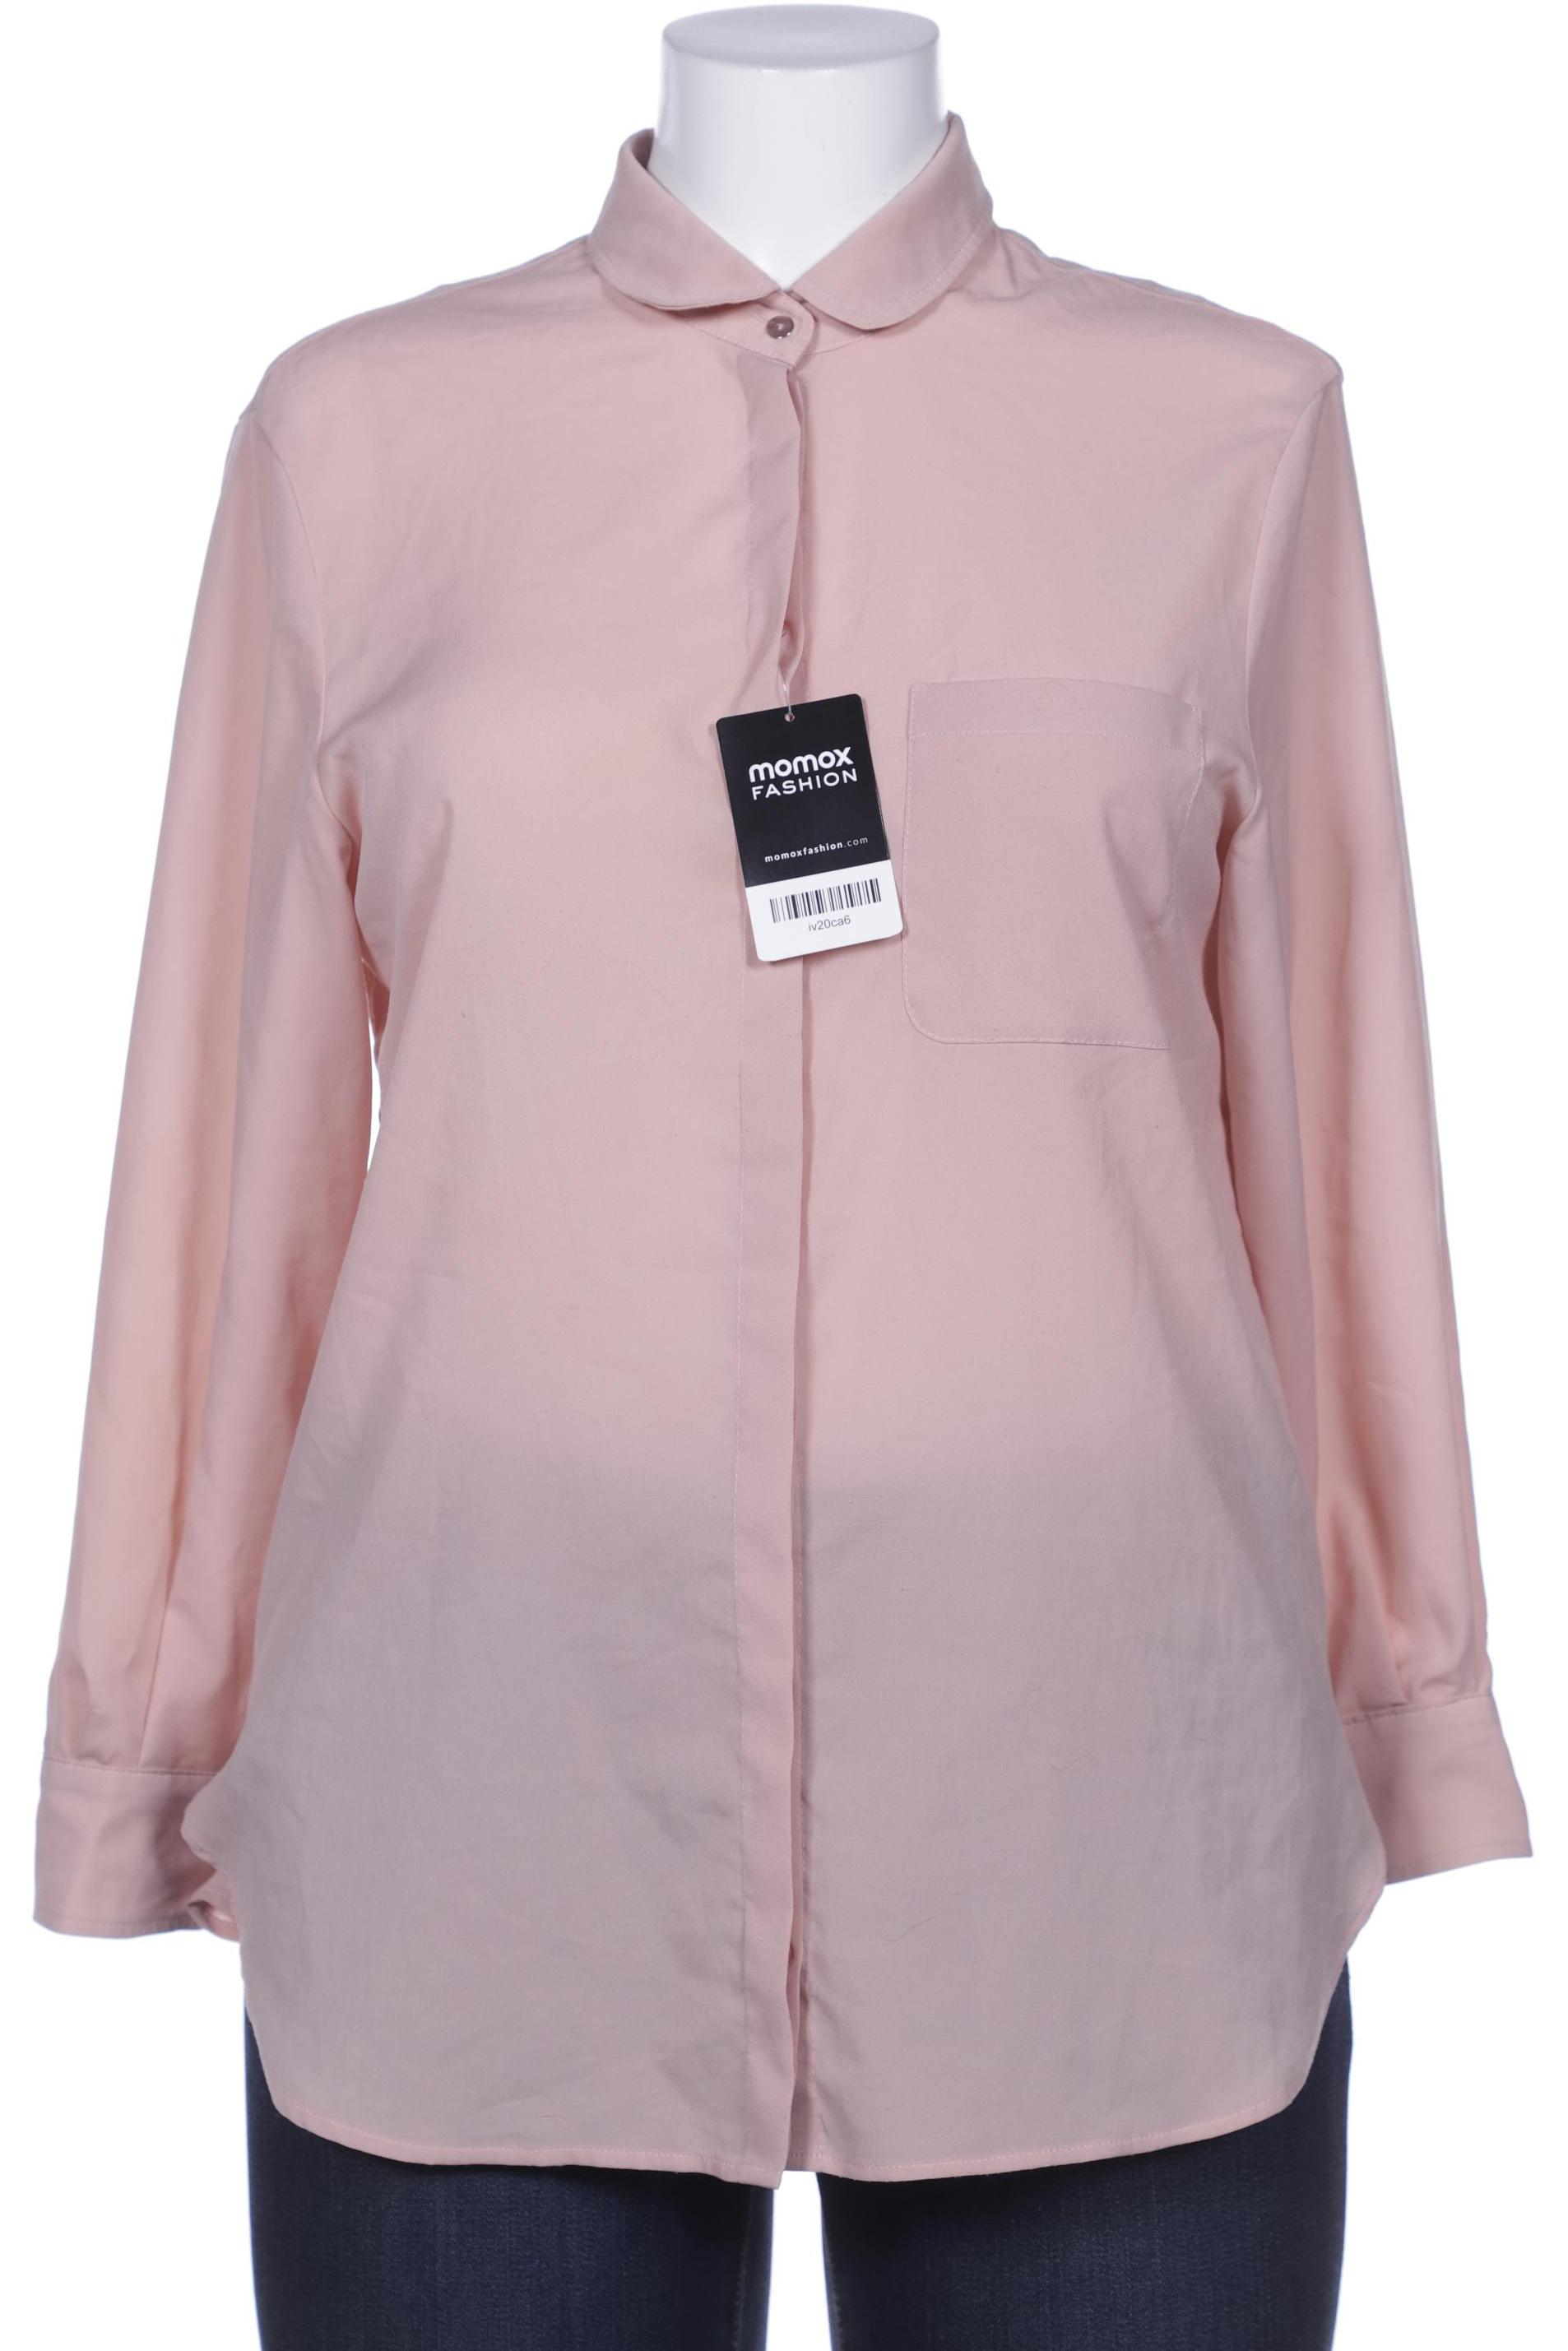 Basler Damen Bluse, pink von Basler